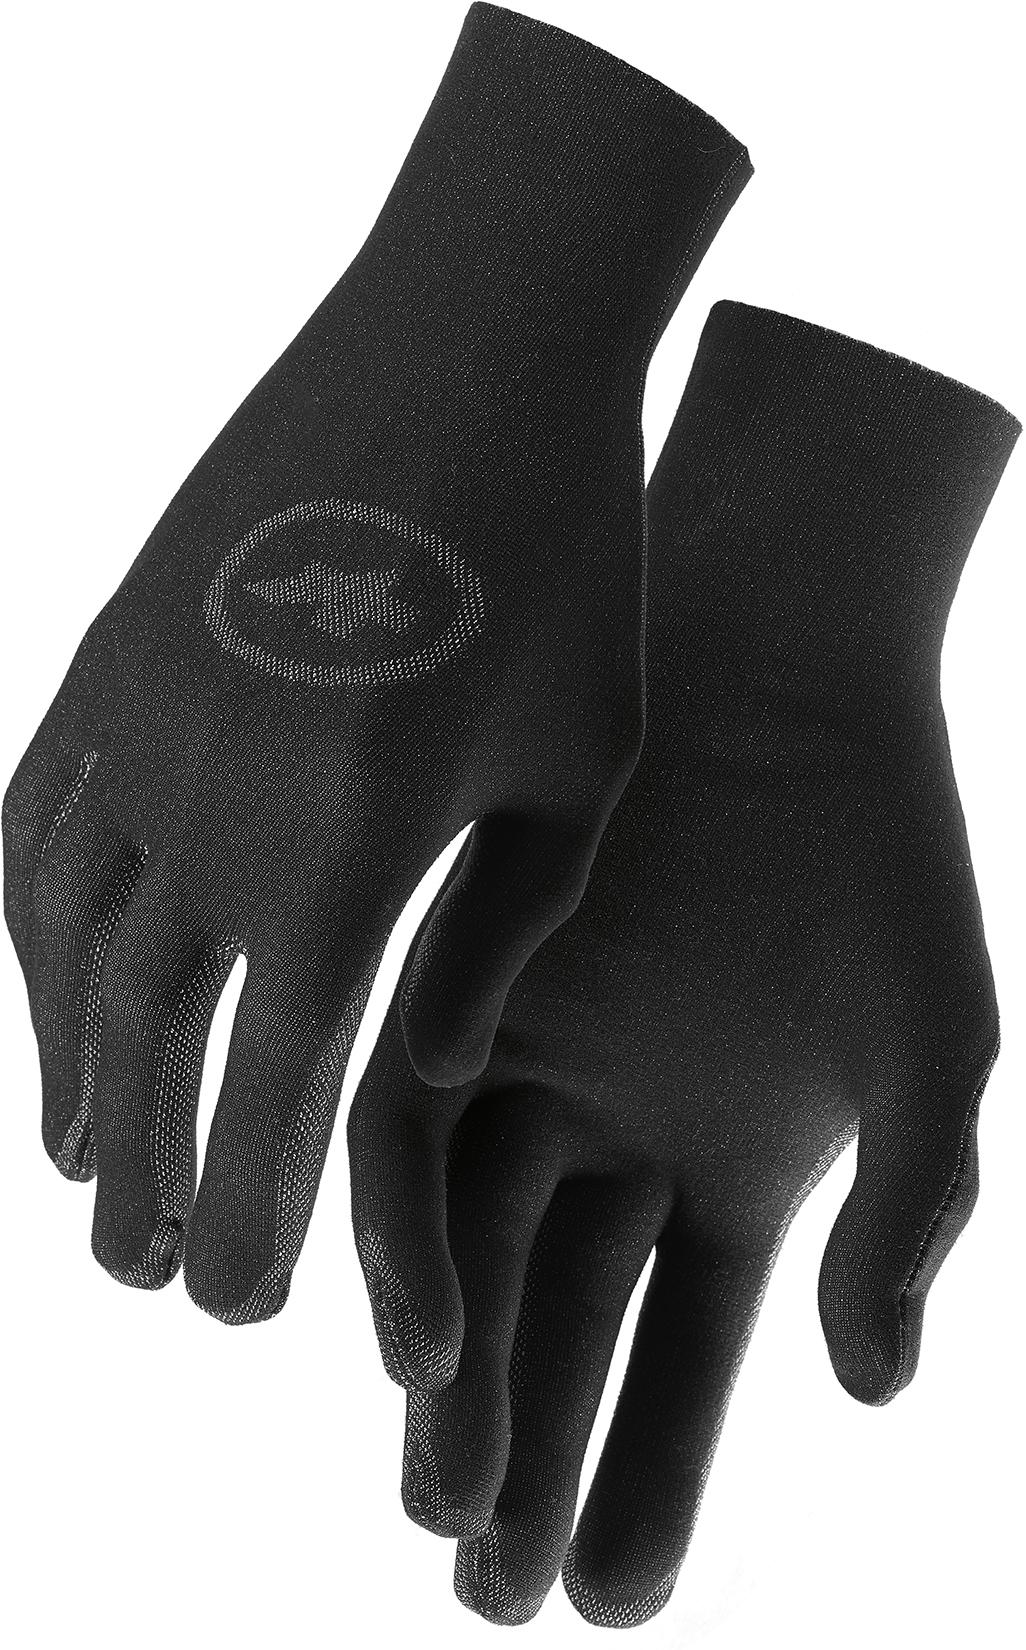 Assos Assosoires Spring Fall Liner Gloves - Black Series